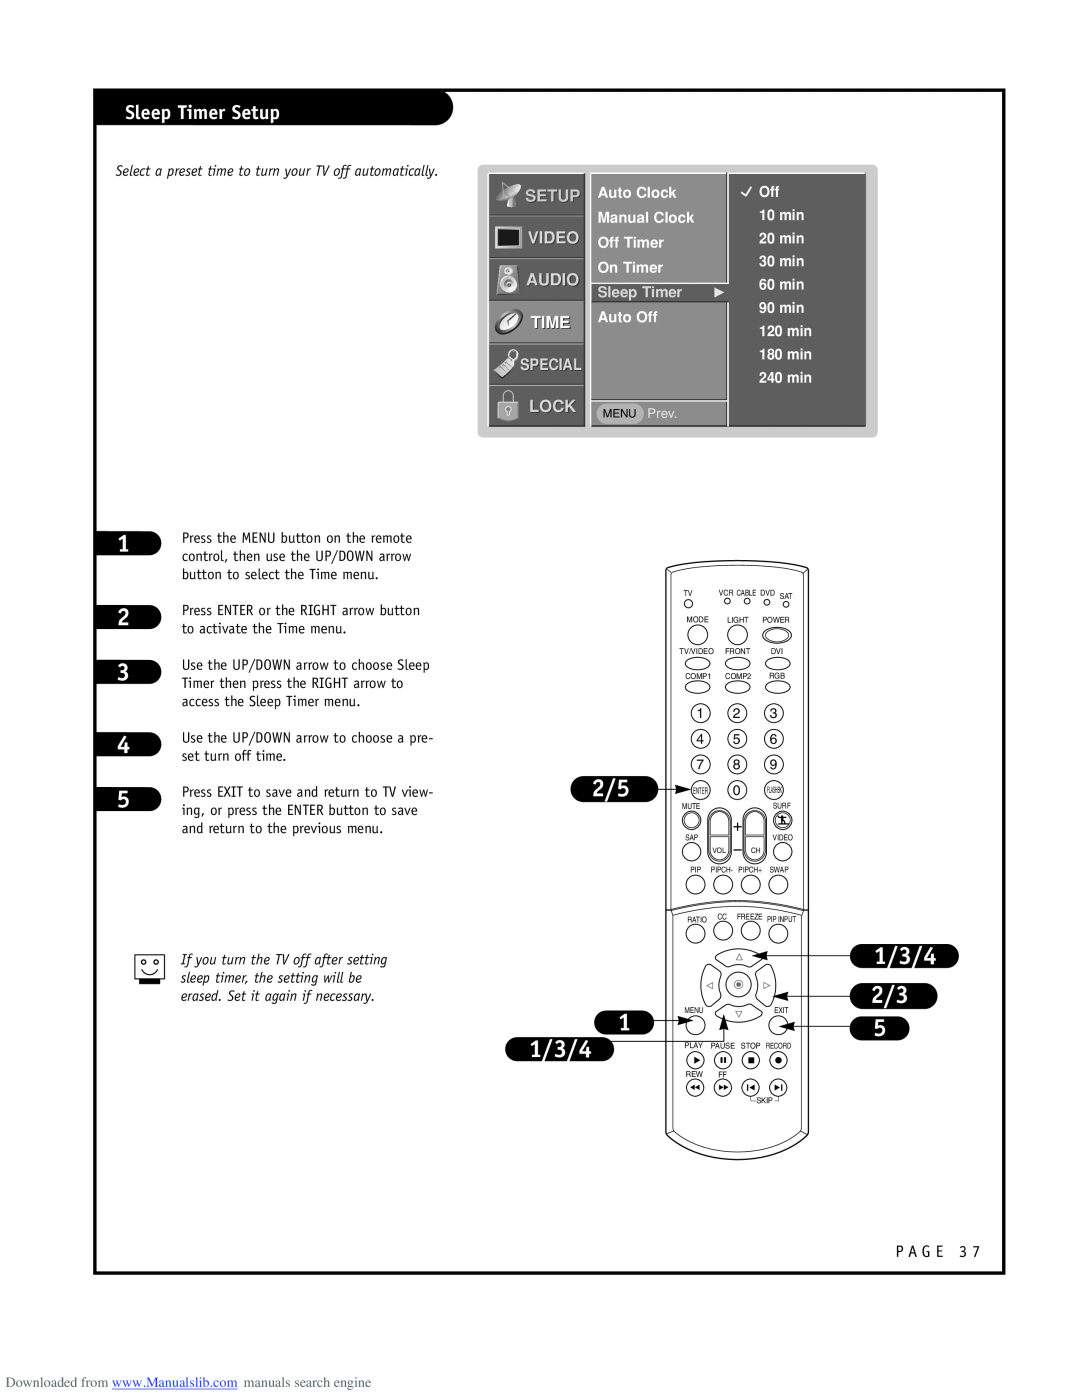 LG Electronics RU-52SZ53D owner manual 1/3/4 2/3, Sleep Timer Setup, Video Audio, Lock, Special, Auto Off, MENU Prev 